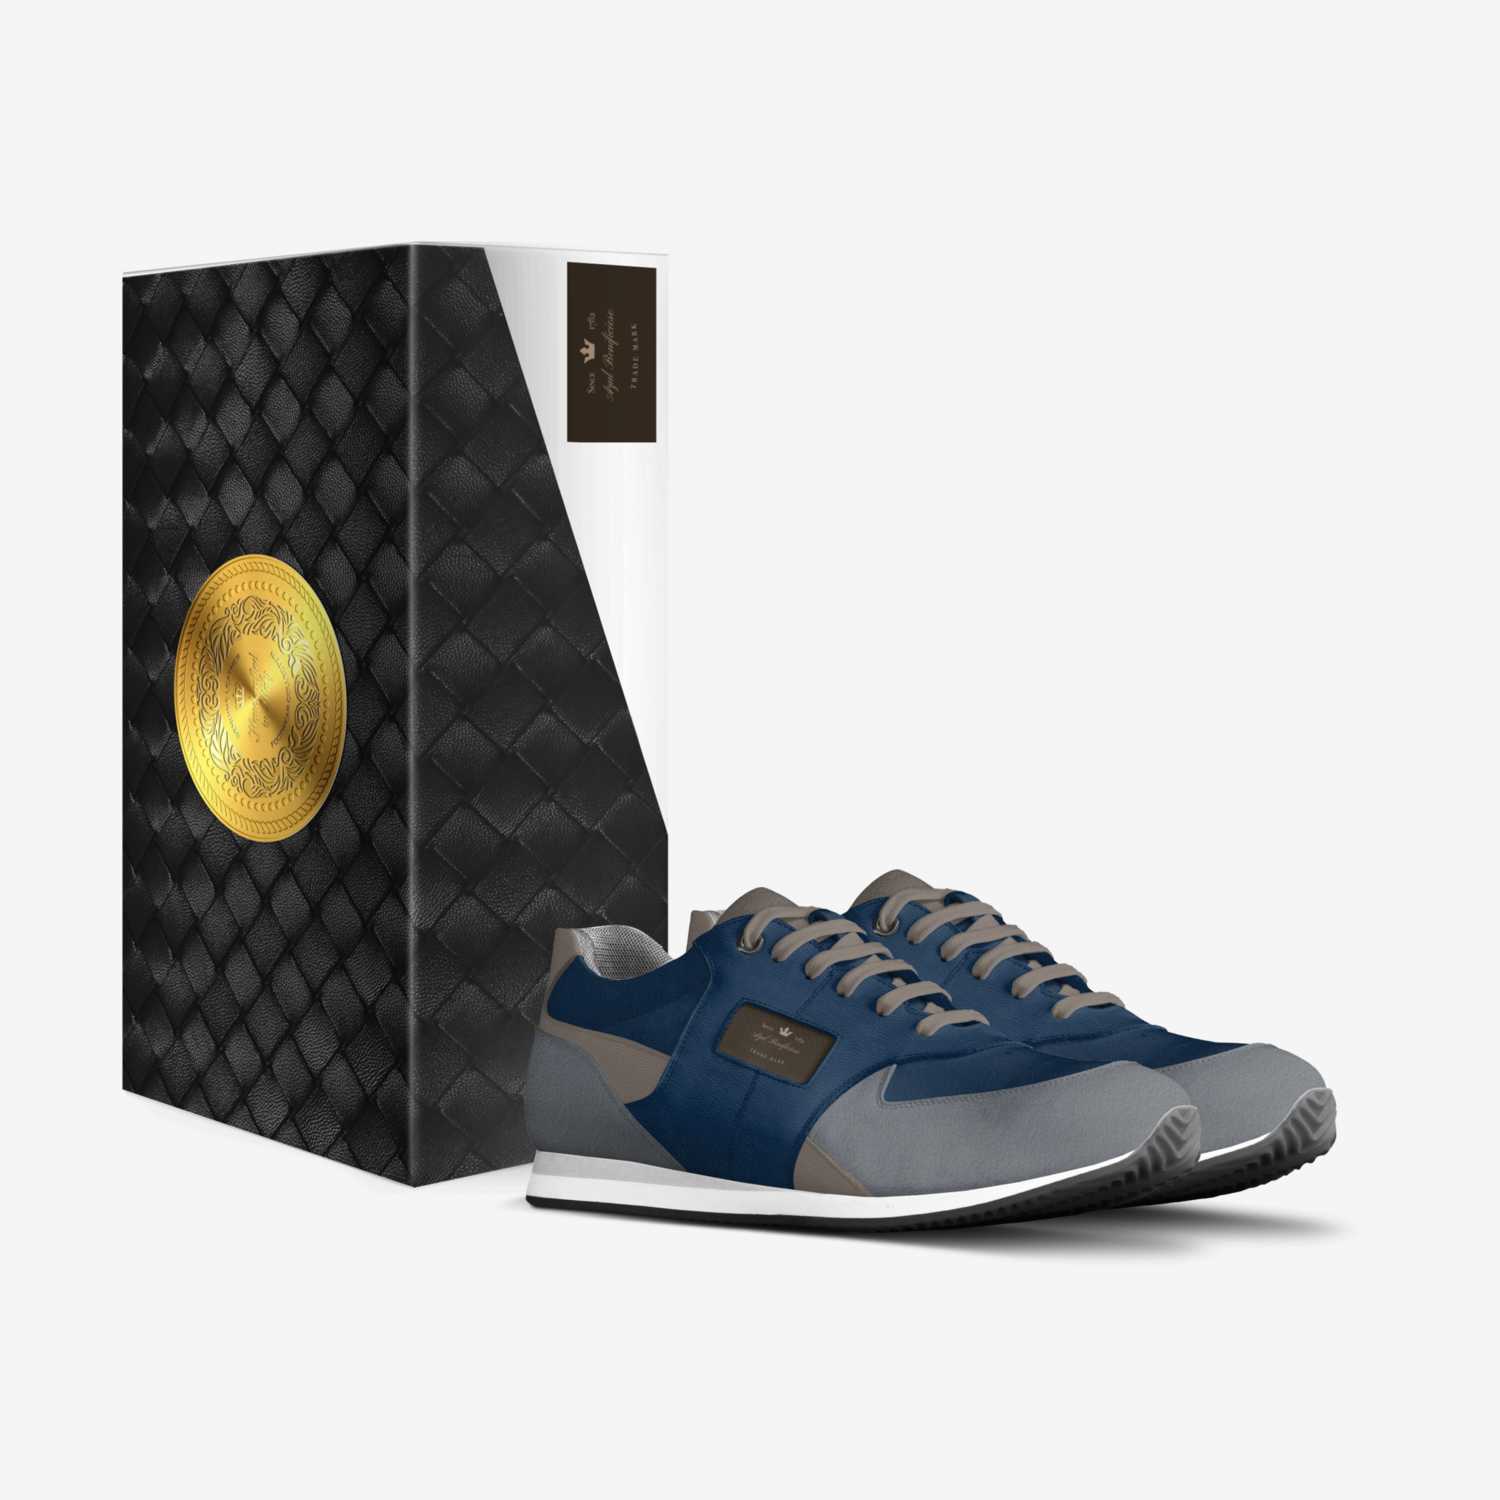 Azul Benificioso custom made in Italy shoes by Brandon Scott Crawford | Box view